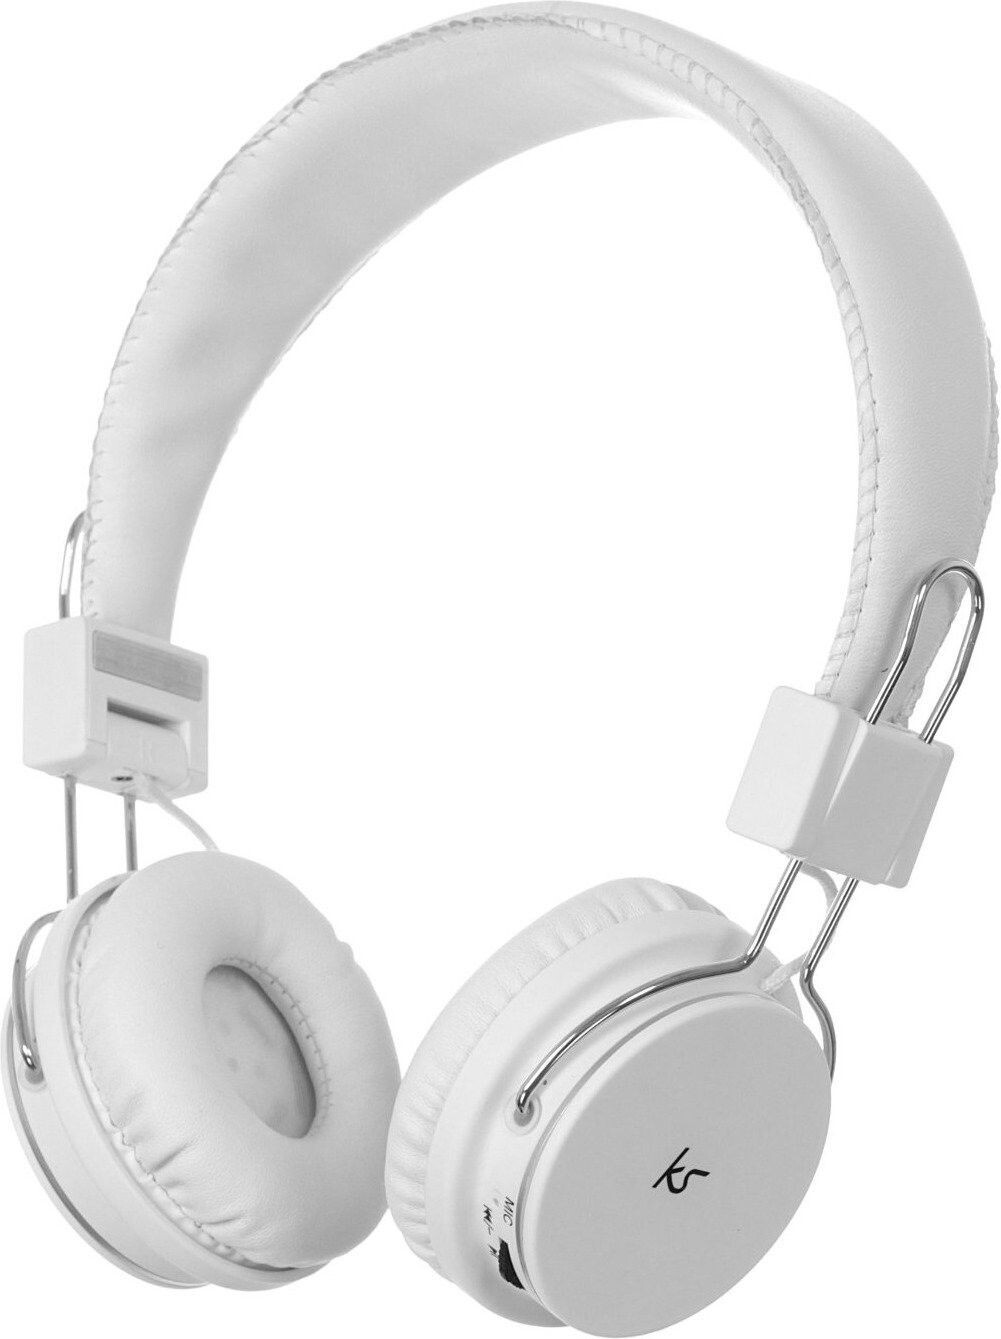 Kitsound Manhattan Over Ear Headphones With mic (White)